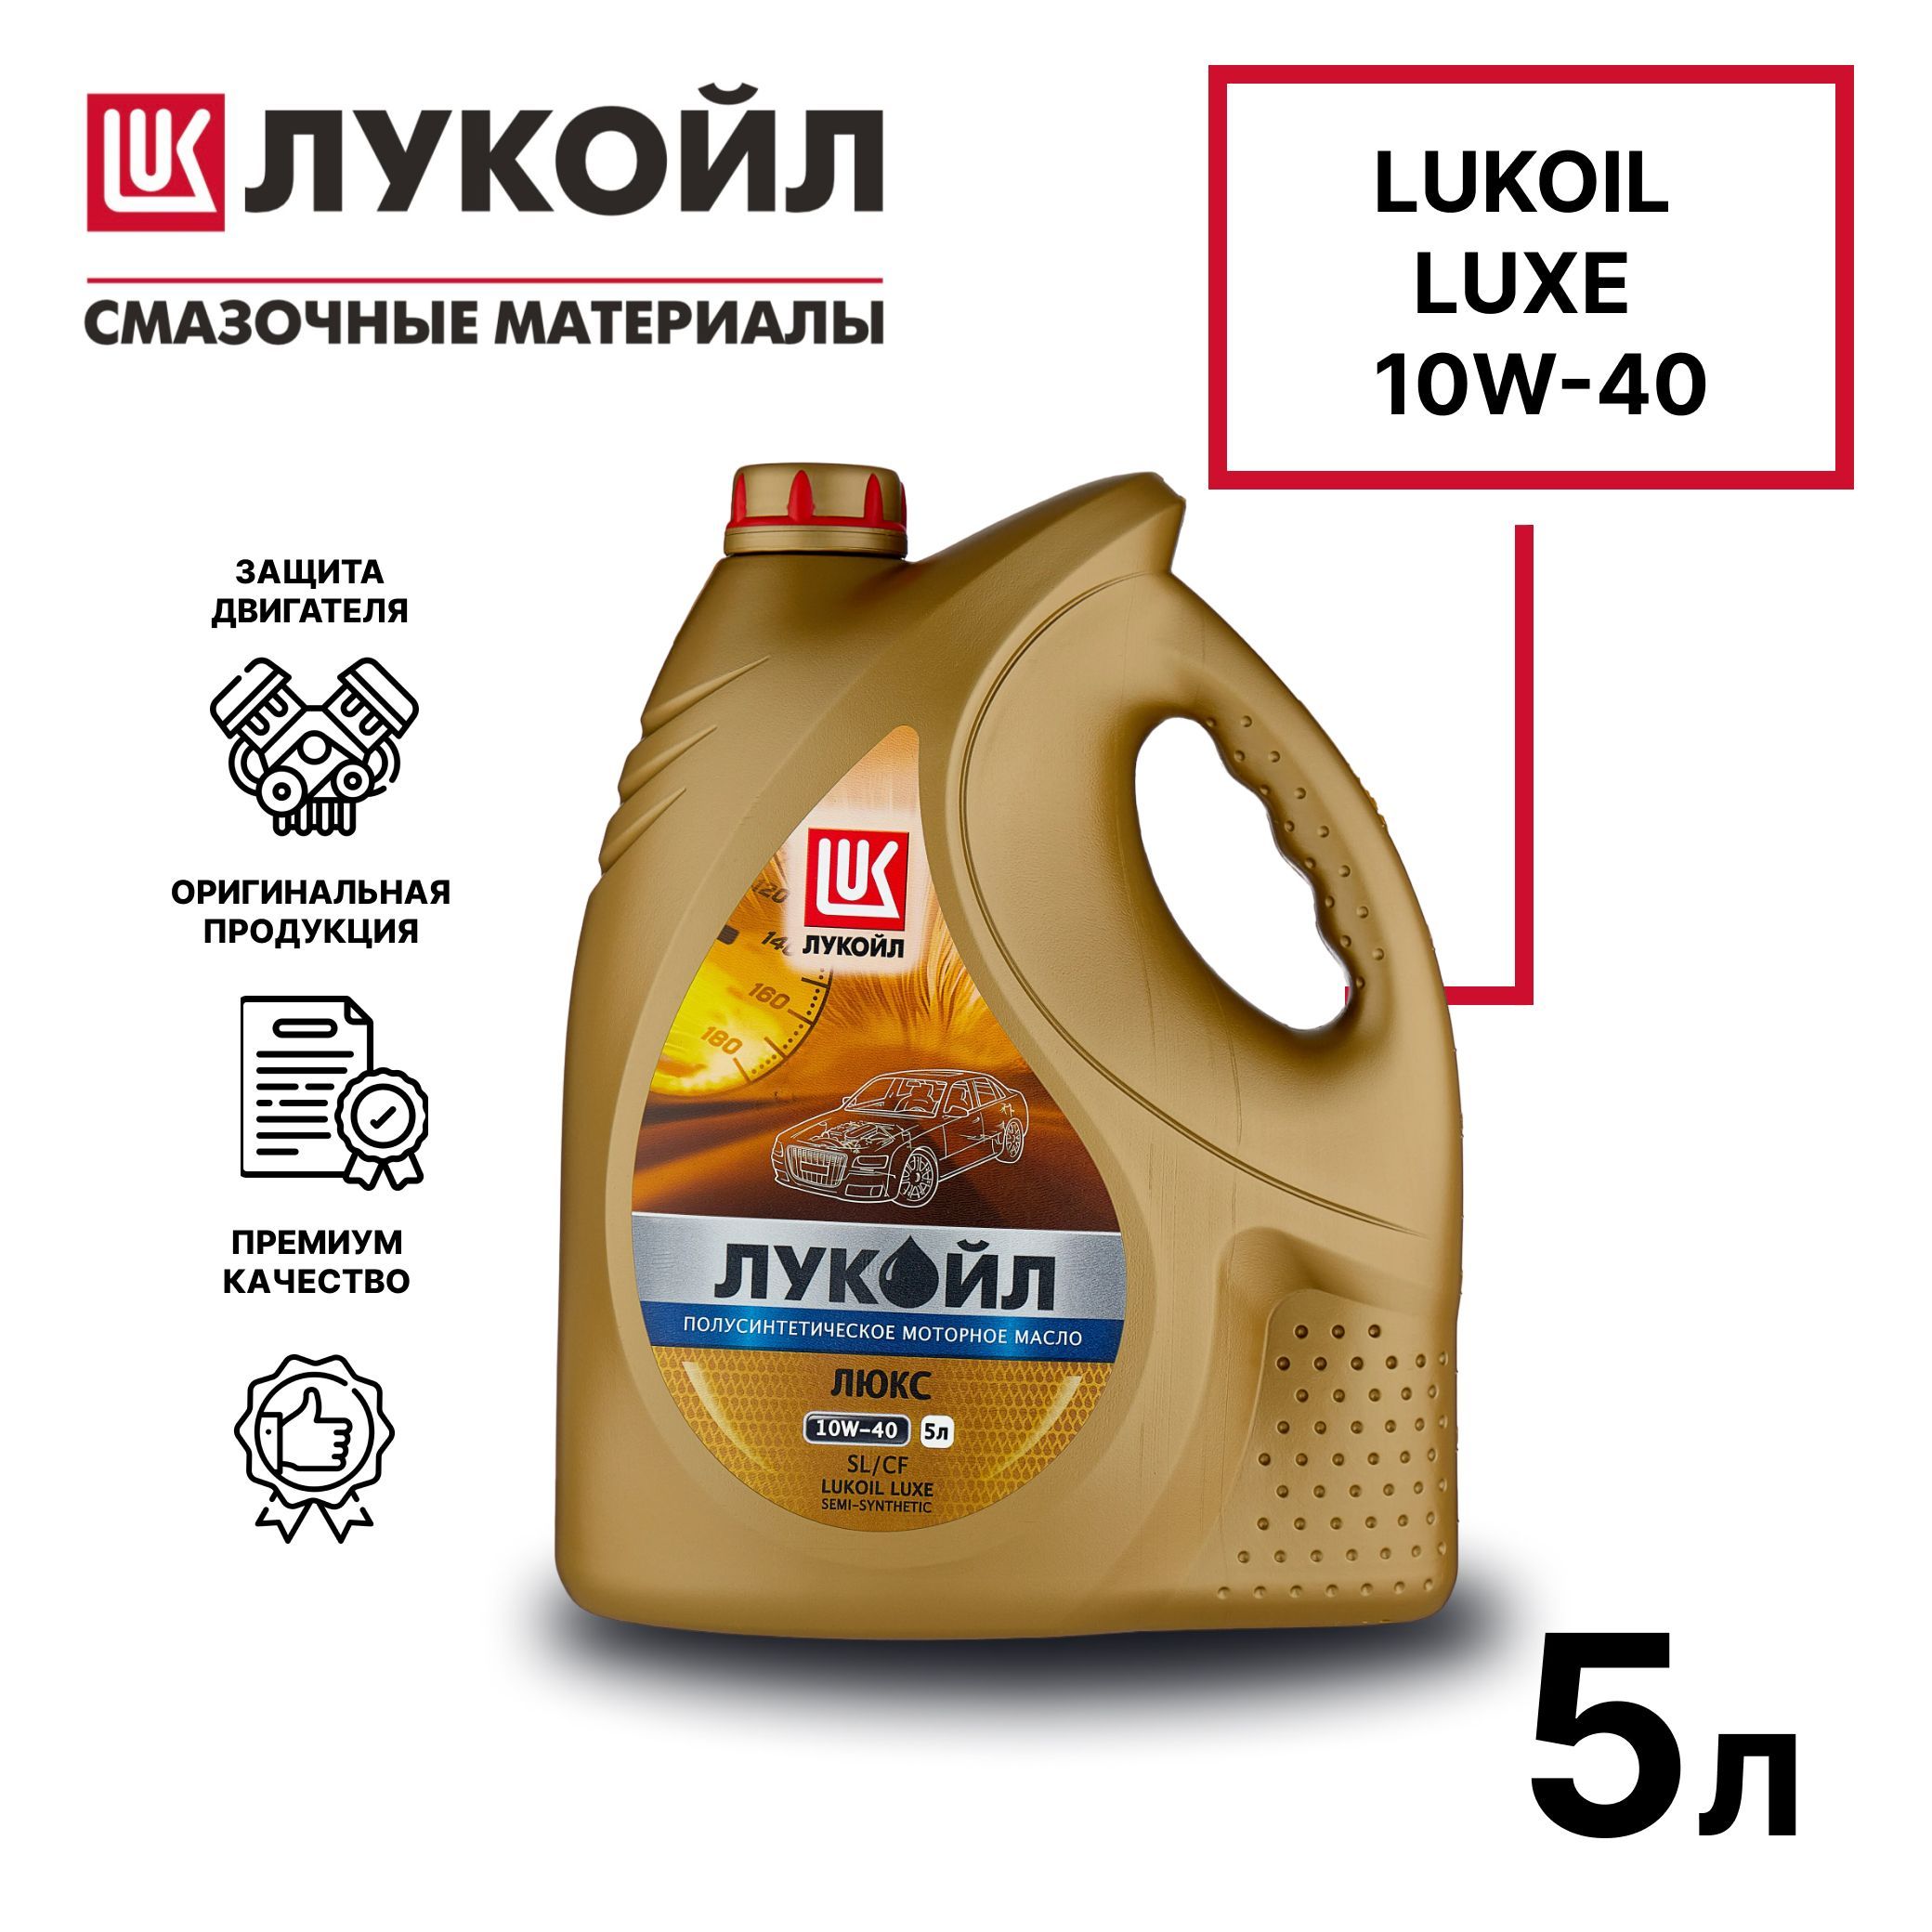 Lukoil Luxe 10w-40. Лукойл Люкс 5 40 SL/CF. Лукойл Люкс 10 w40 ЫД са. Лукоид Люкс 10и40 5л. Масло люкс 10w40